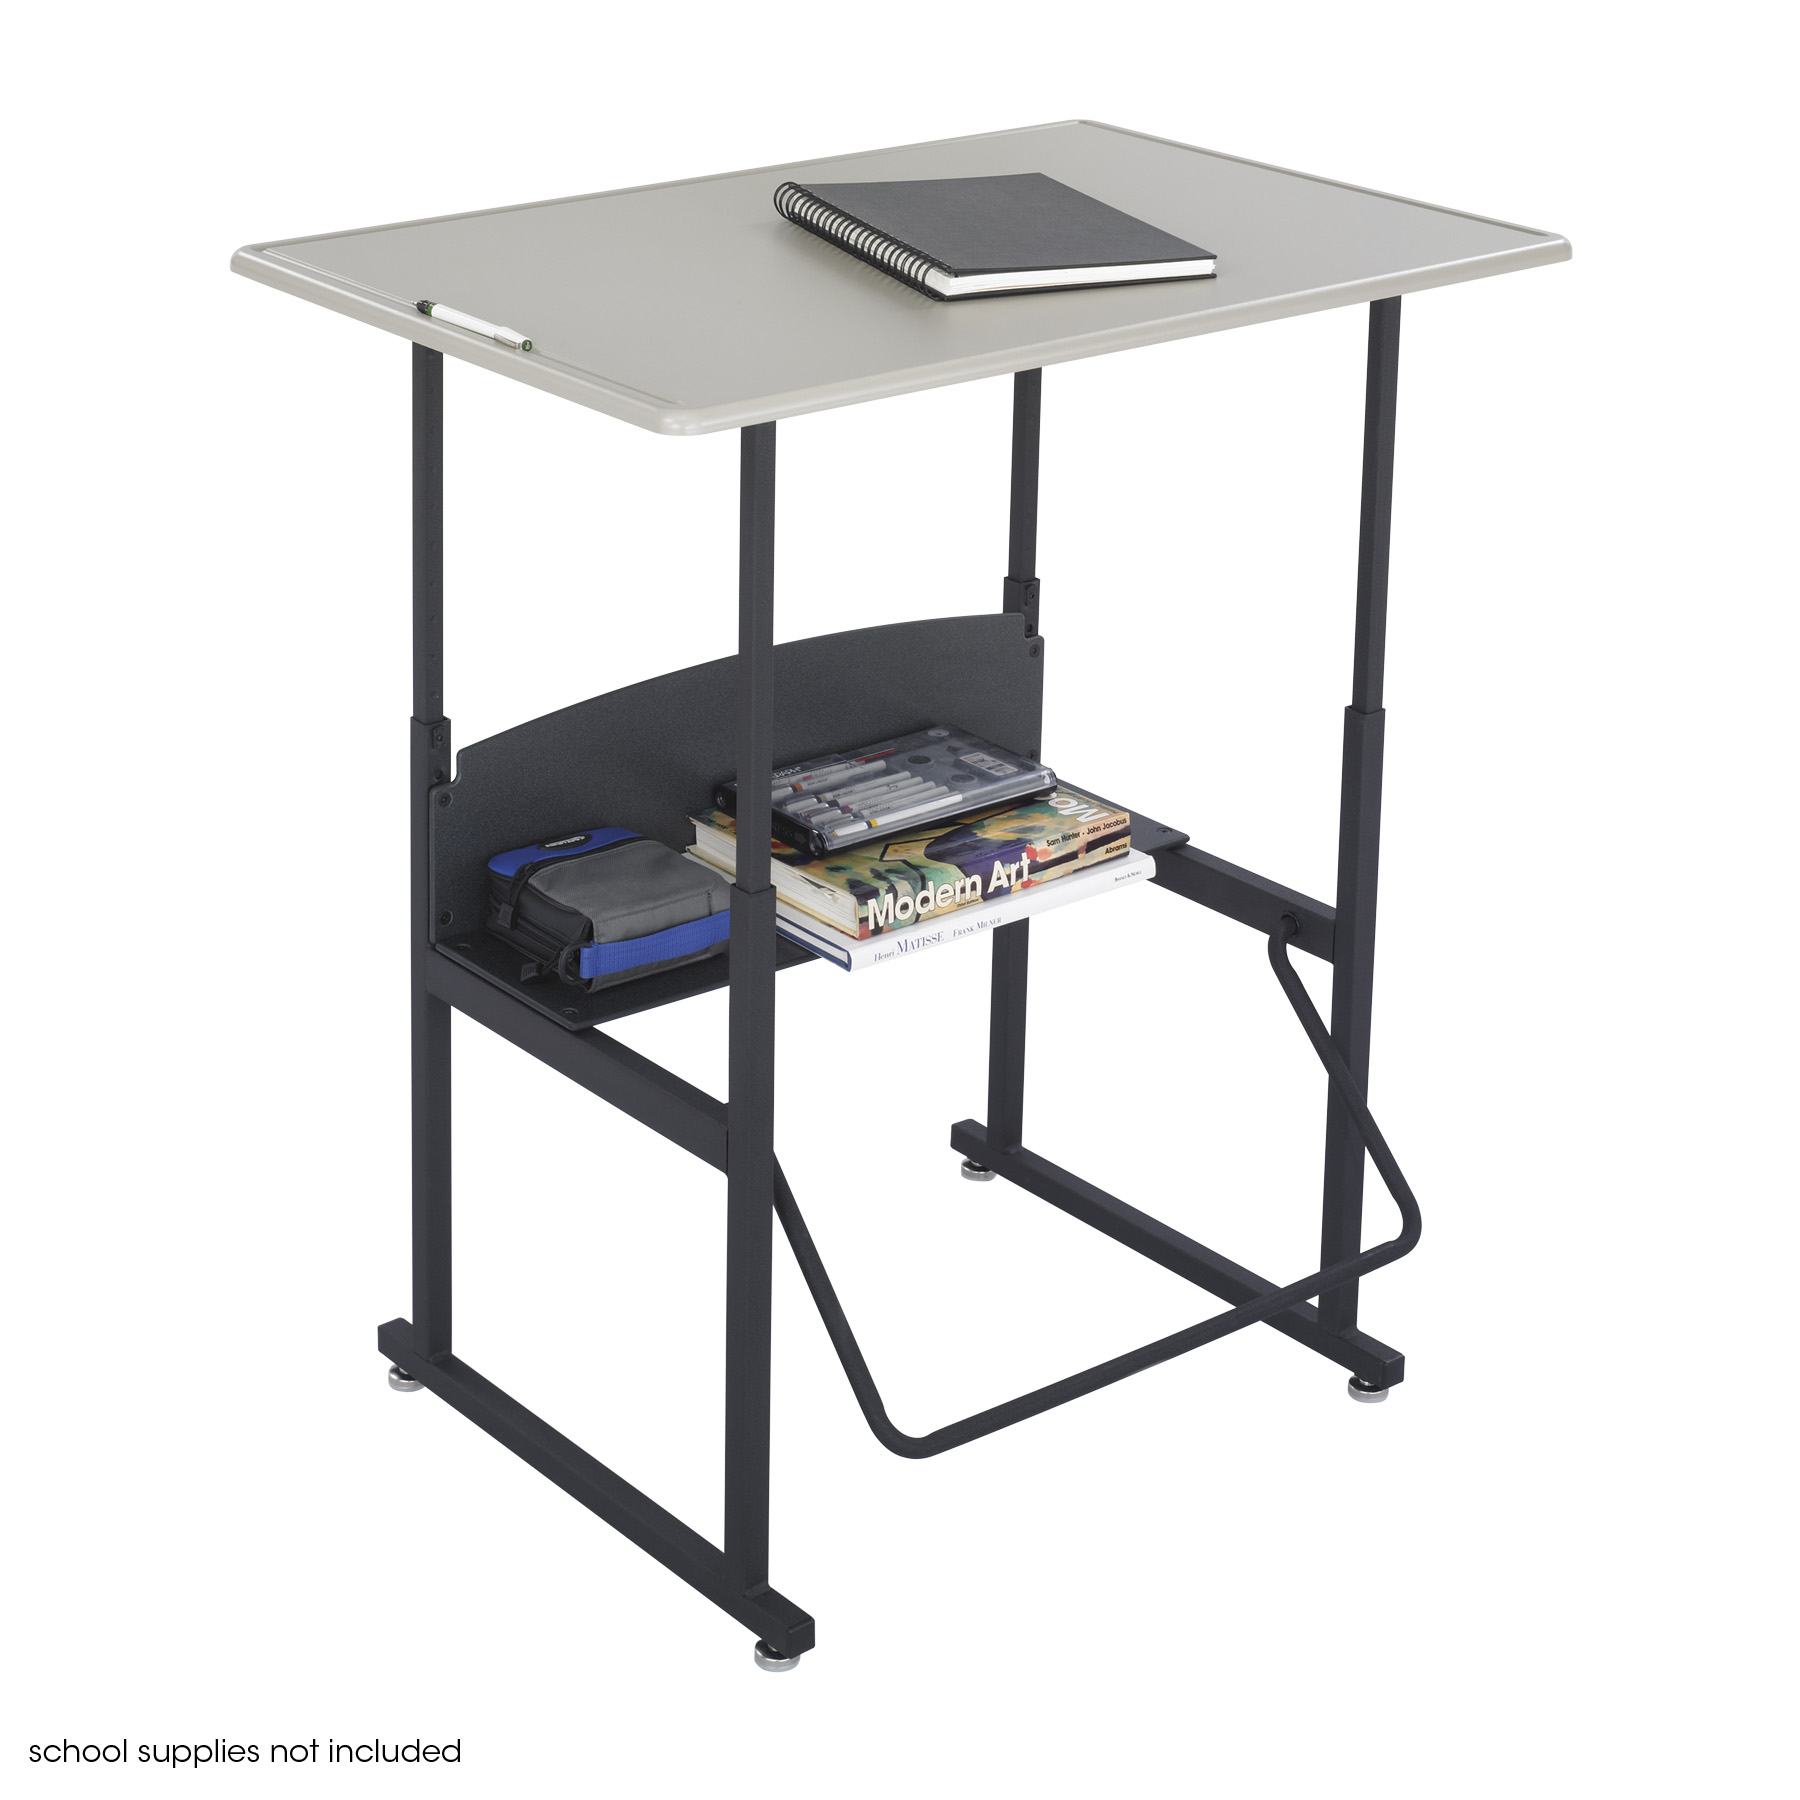 FOR SALE - standing desk converter and foot fidget bar - $50 each - pickup  near 23rd ave : r/astoria